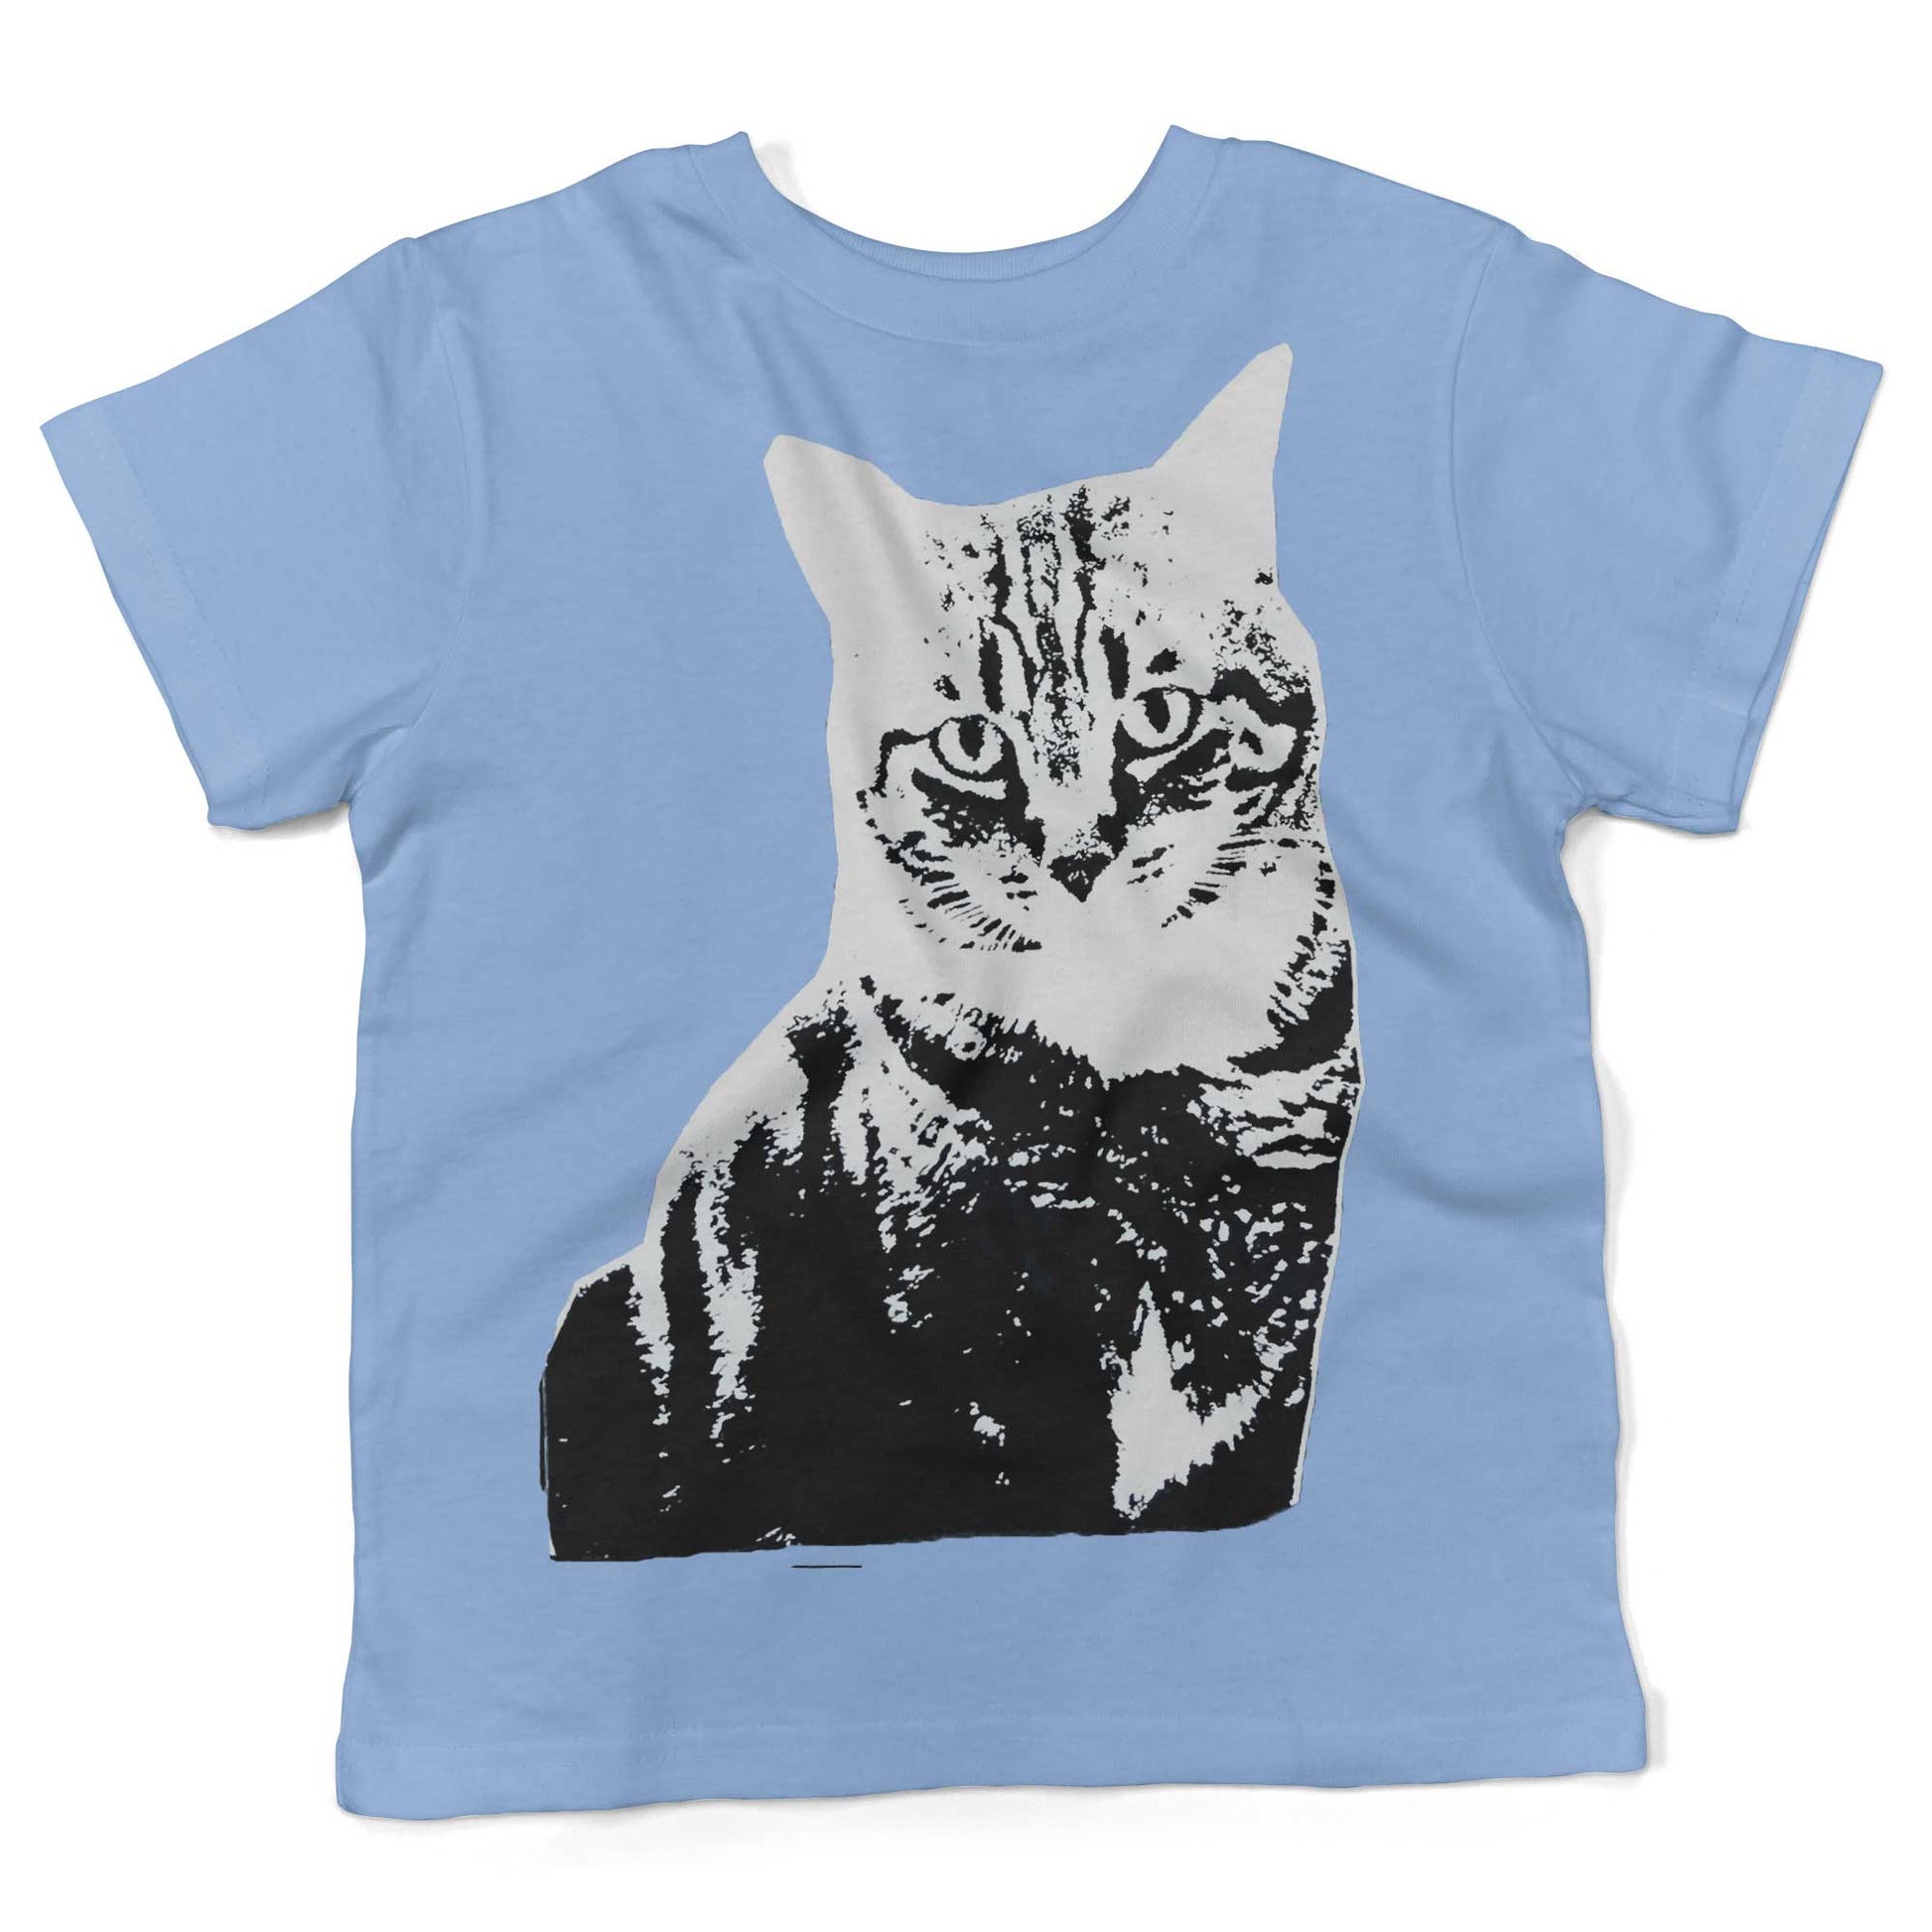 Black & White Cat Toddler Shirt-Organic Baby Blue-2T